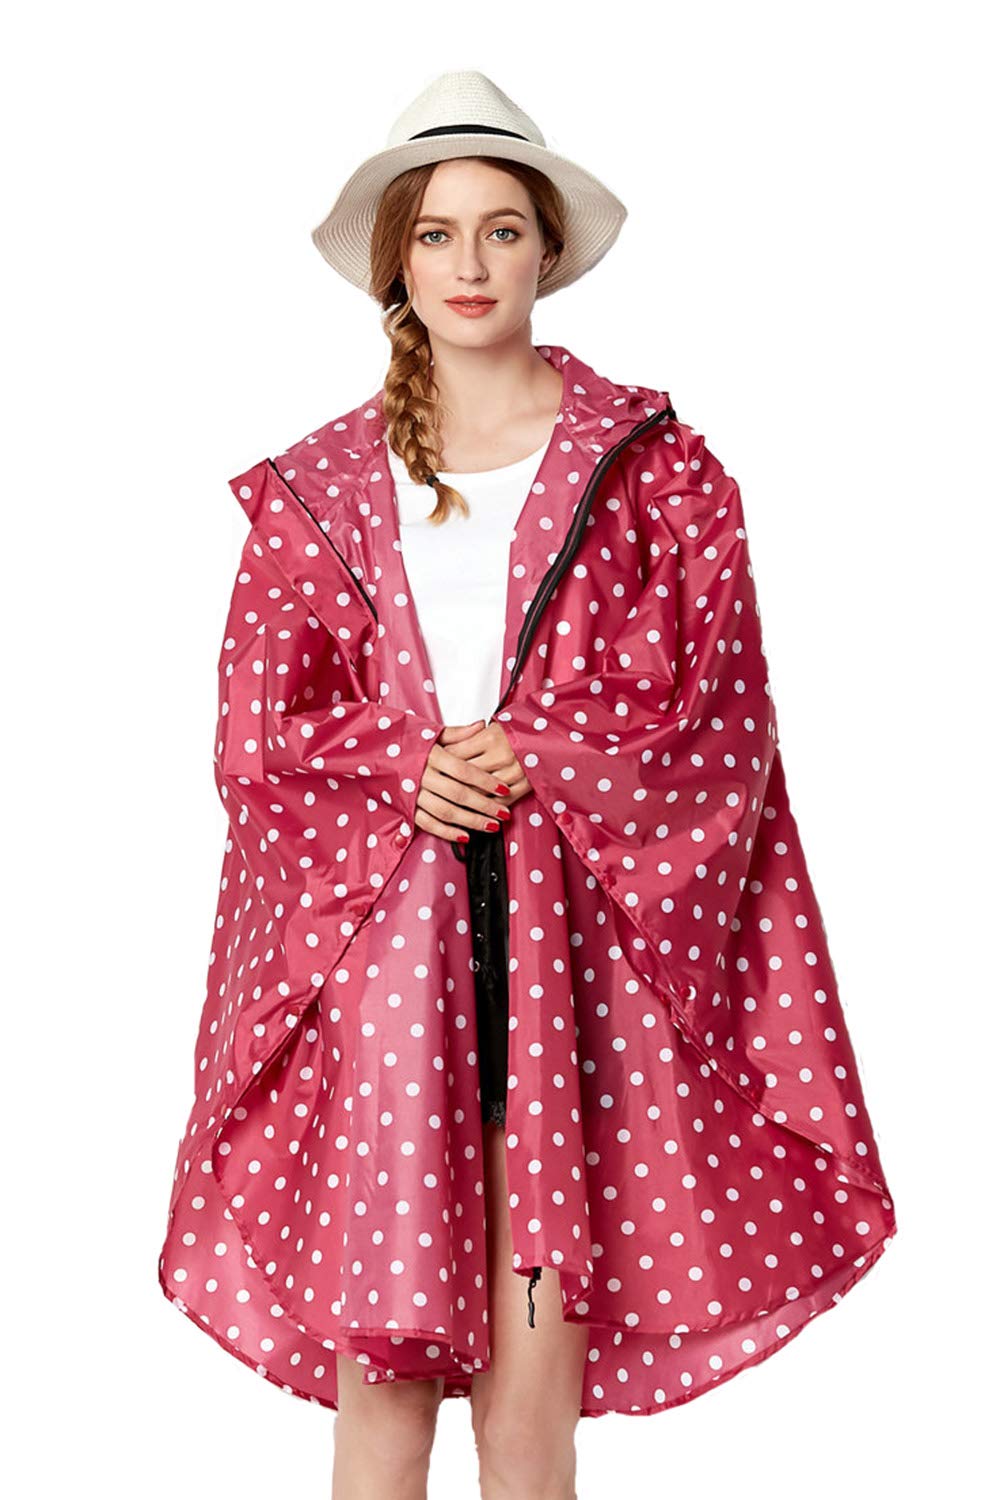 NUUR Damen Regenponcho Regenmantel Unisex Regenjacke Wasserdicht Regencape Wiederverwendbar mit Kapuze Rosa